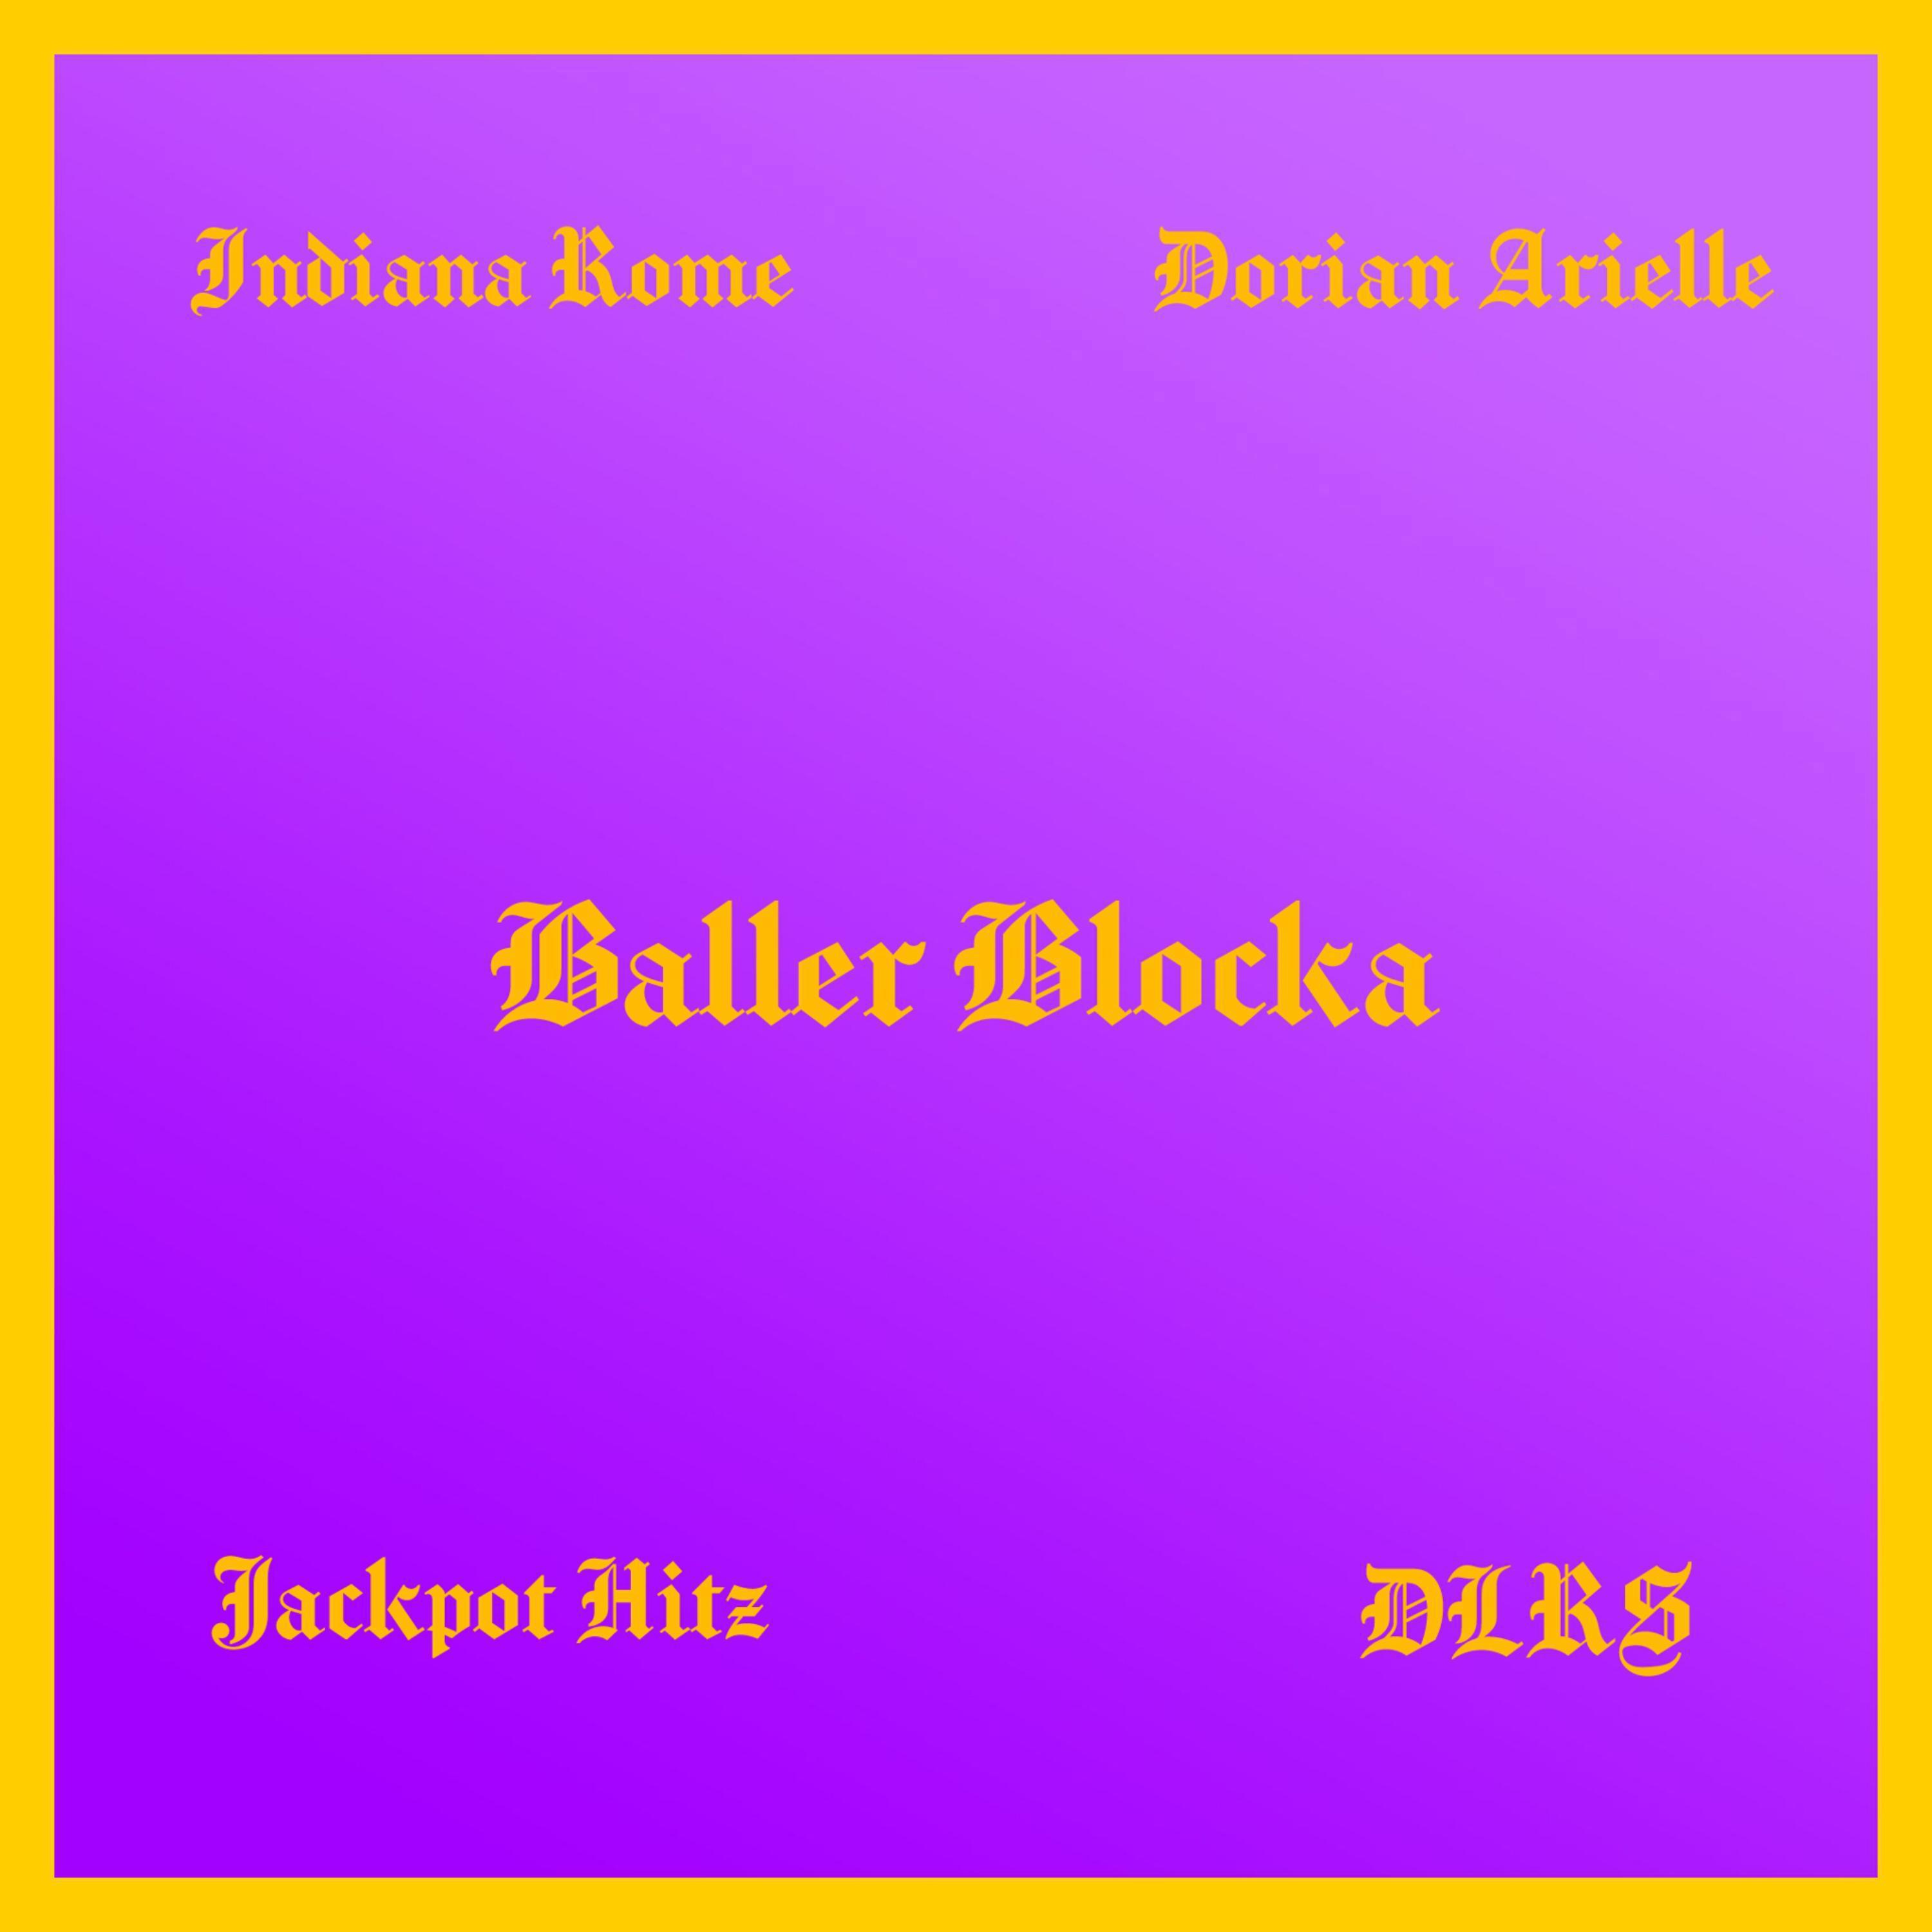 Indiana Rome - Baller Blocka